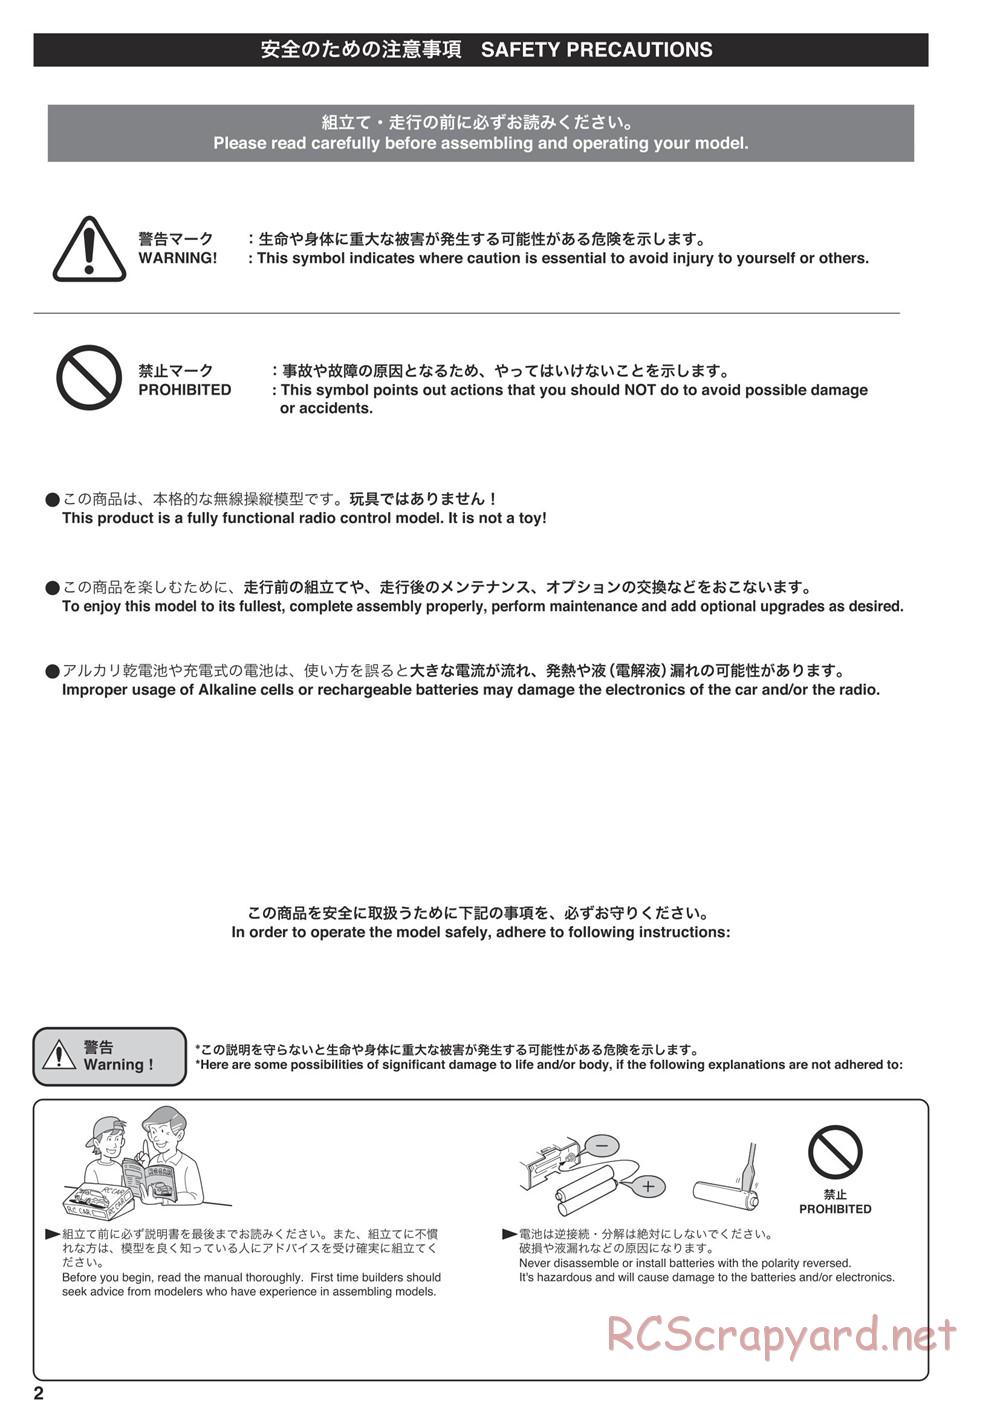 Kyosho - Inferno MP9e Evo - Manual - Page 2